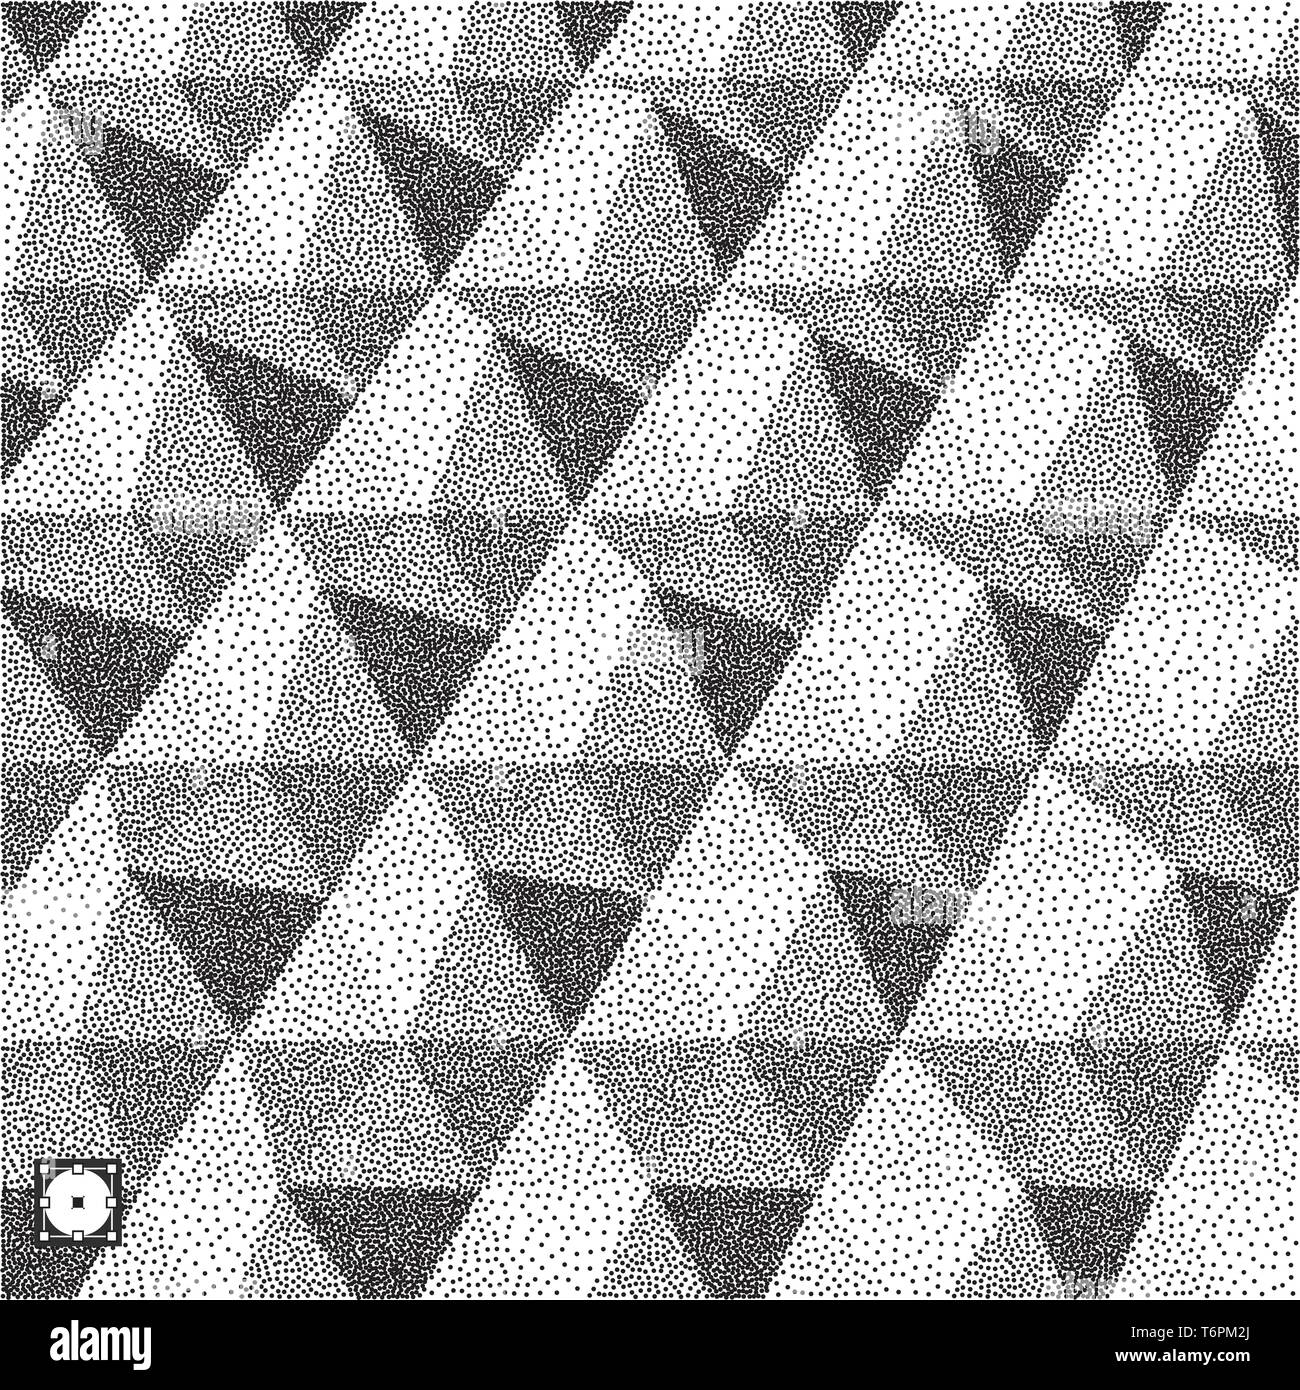 Geometric background. Black and white grainy design. Pointillism pattern. Stippled vector illustration. Stock Vector